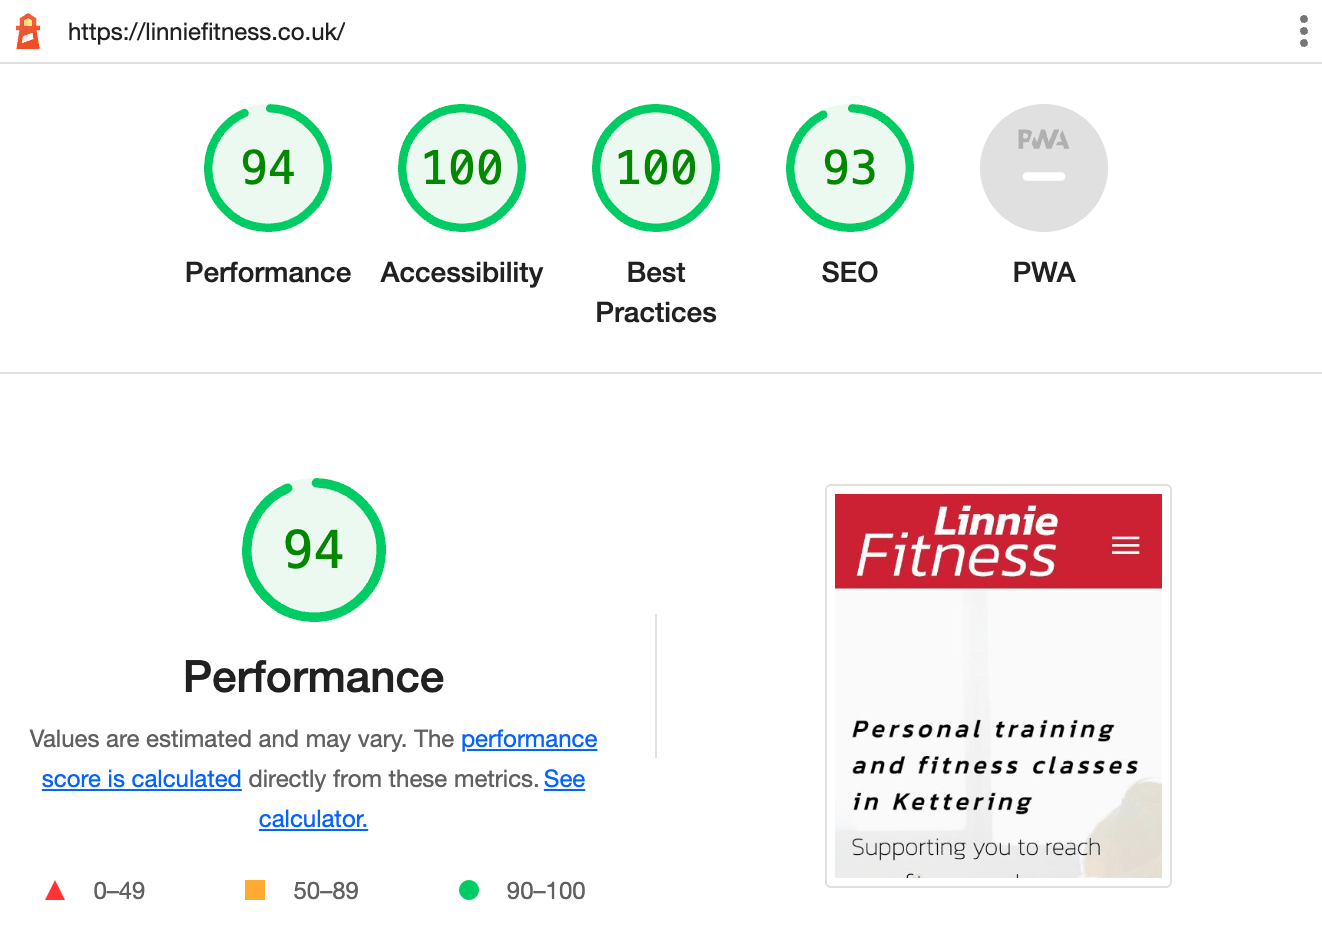 Linnie fitness website Google lighthouse scores..